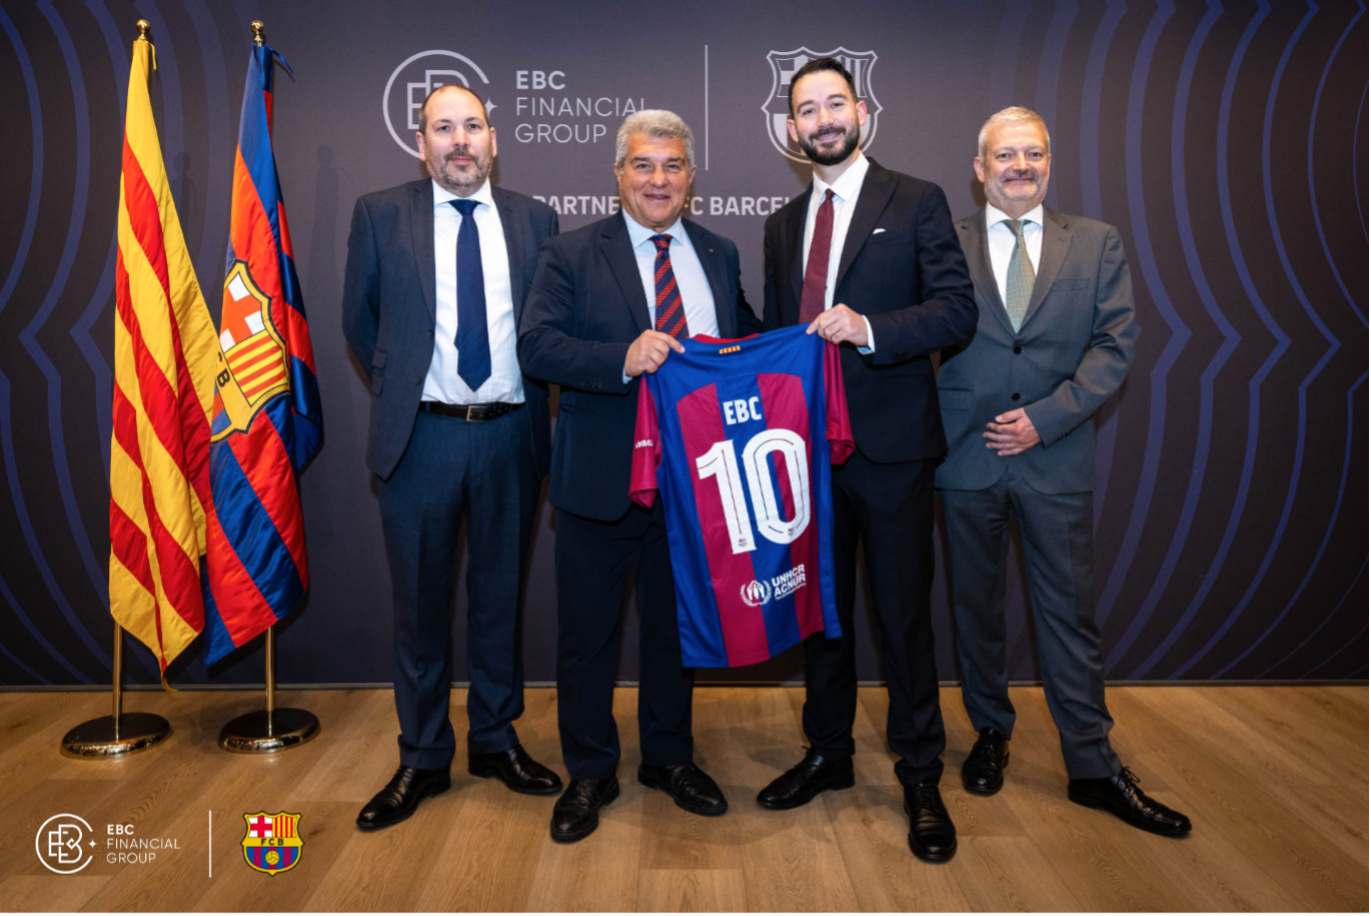 EBC 金融集團和巴塞隆納足球俱樂部與主席 Joan Laporta 通過儀式性的球衣交換慶祝金融與足球的結合。